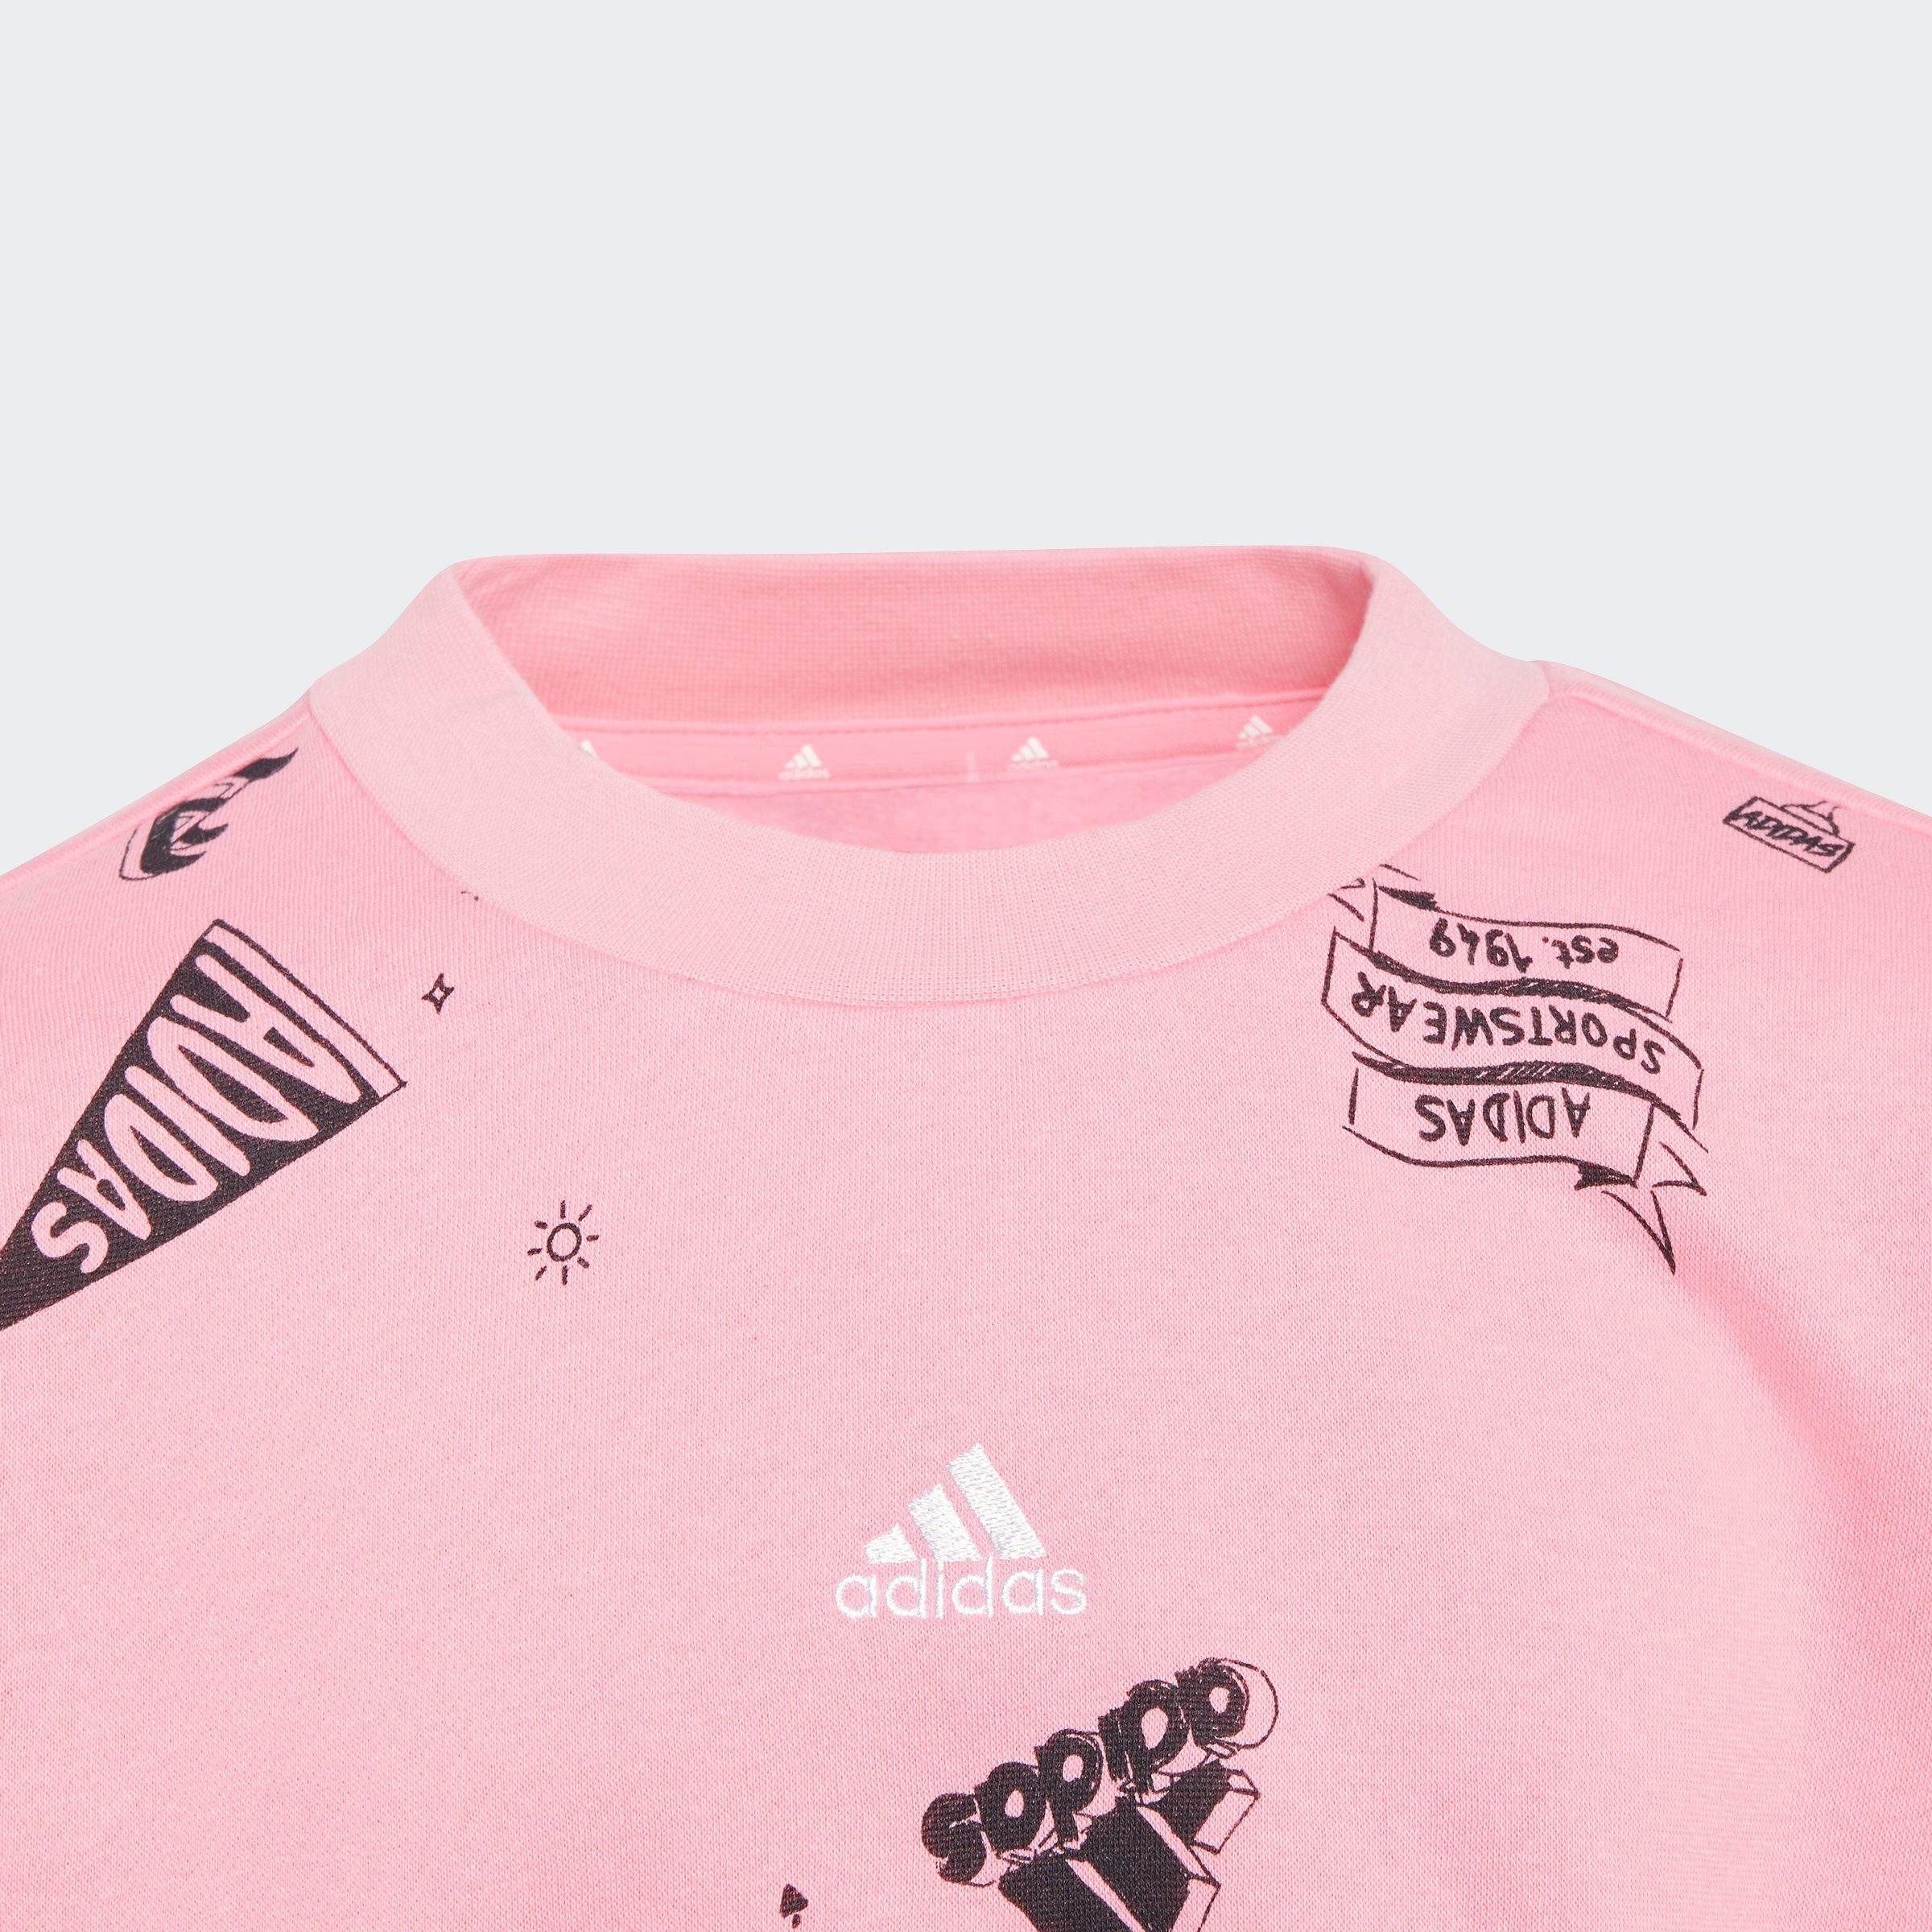 ALLOVER bliss adidas PRINT pink-black LOVE Sportswear KIDS Sweatshirt BRAND